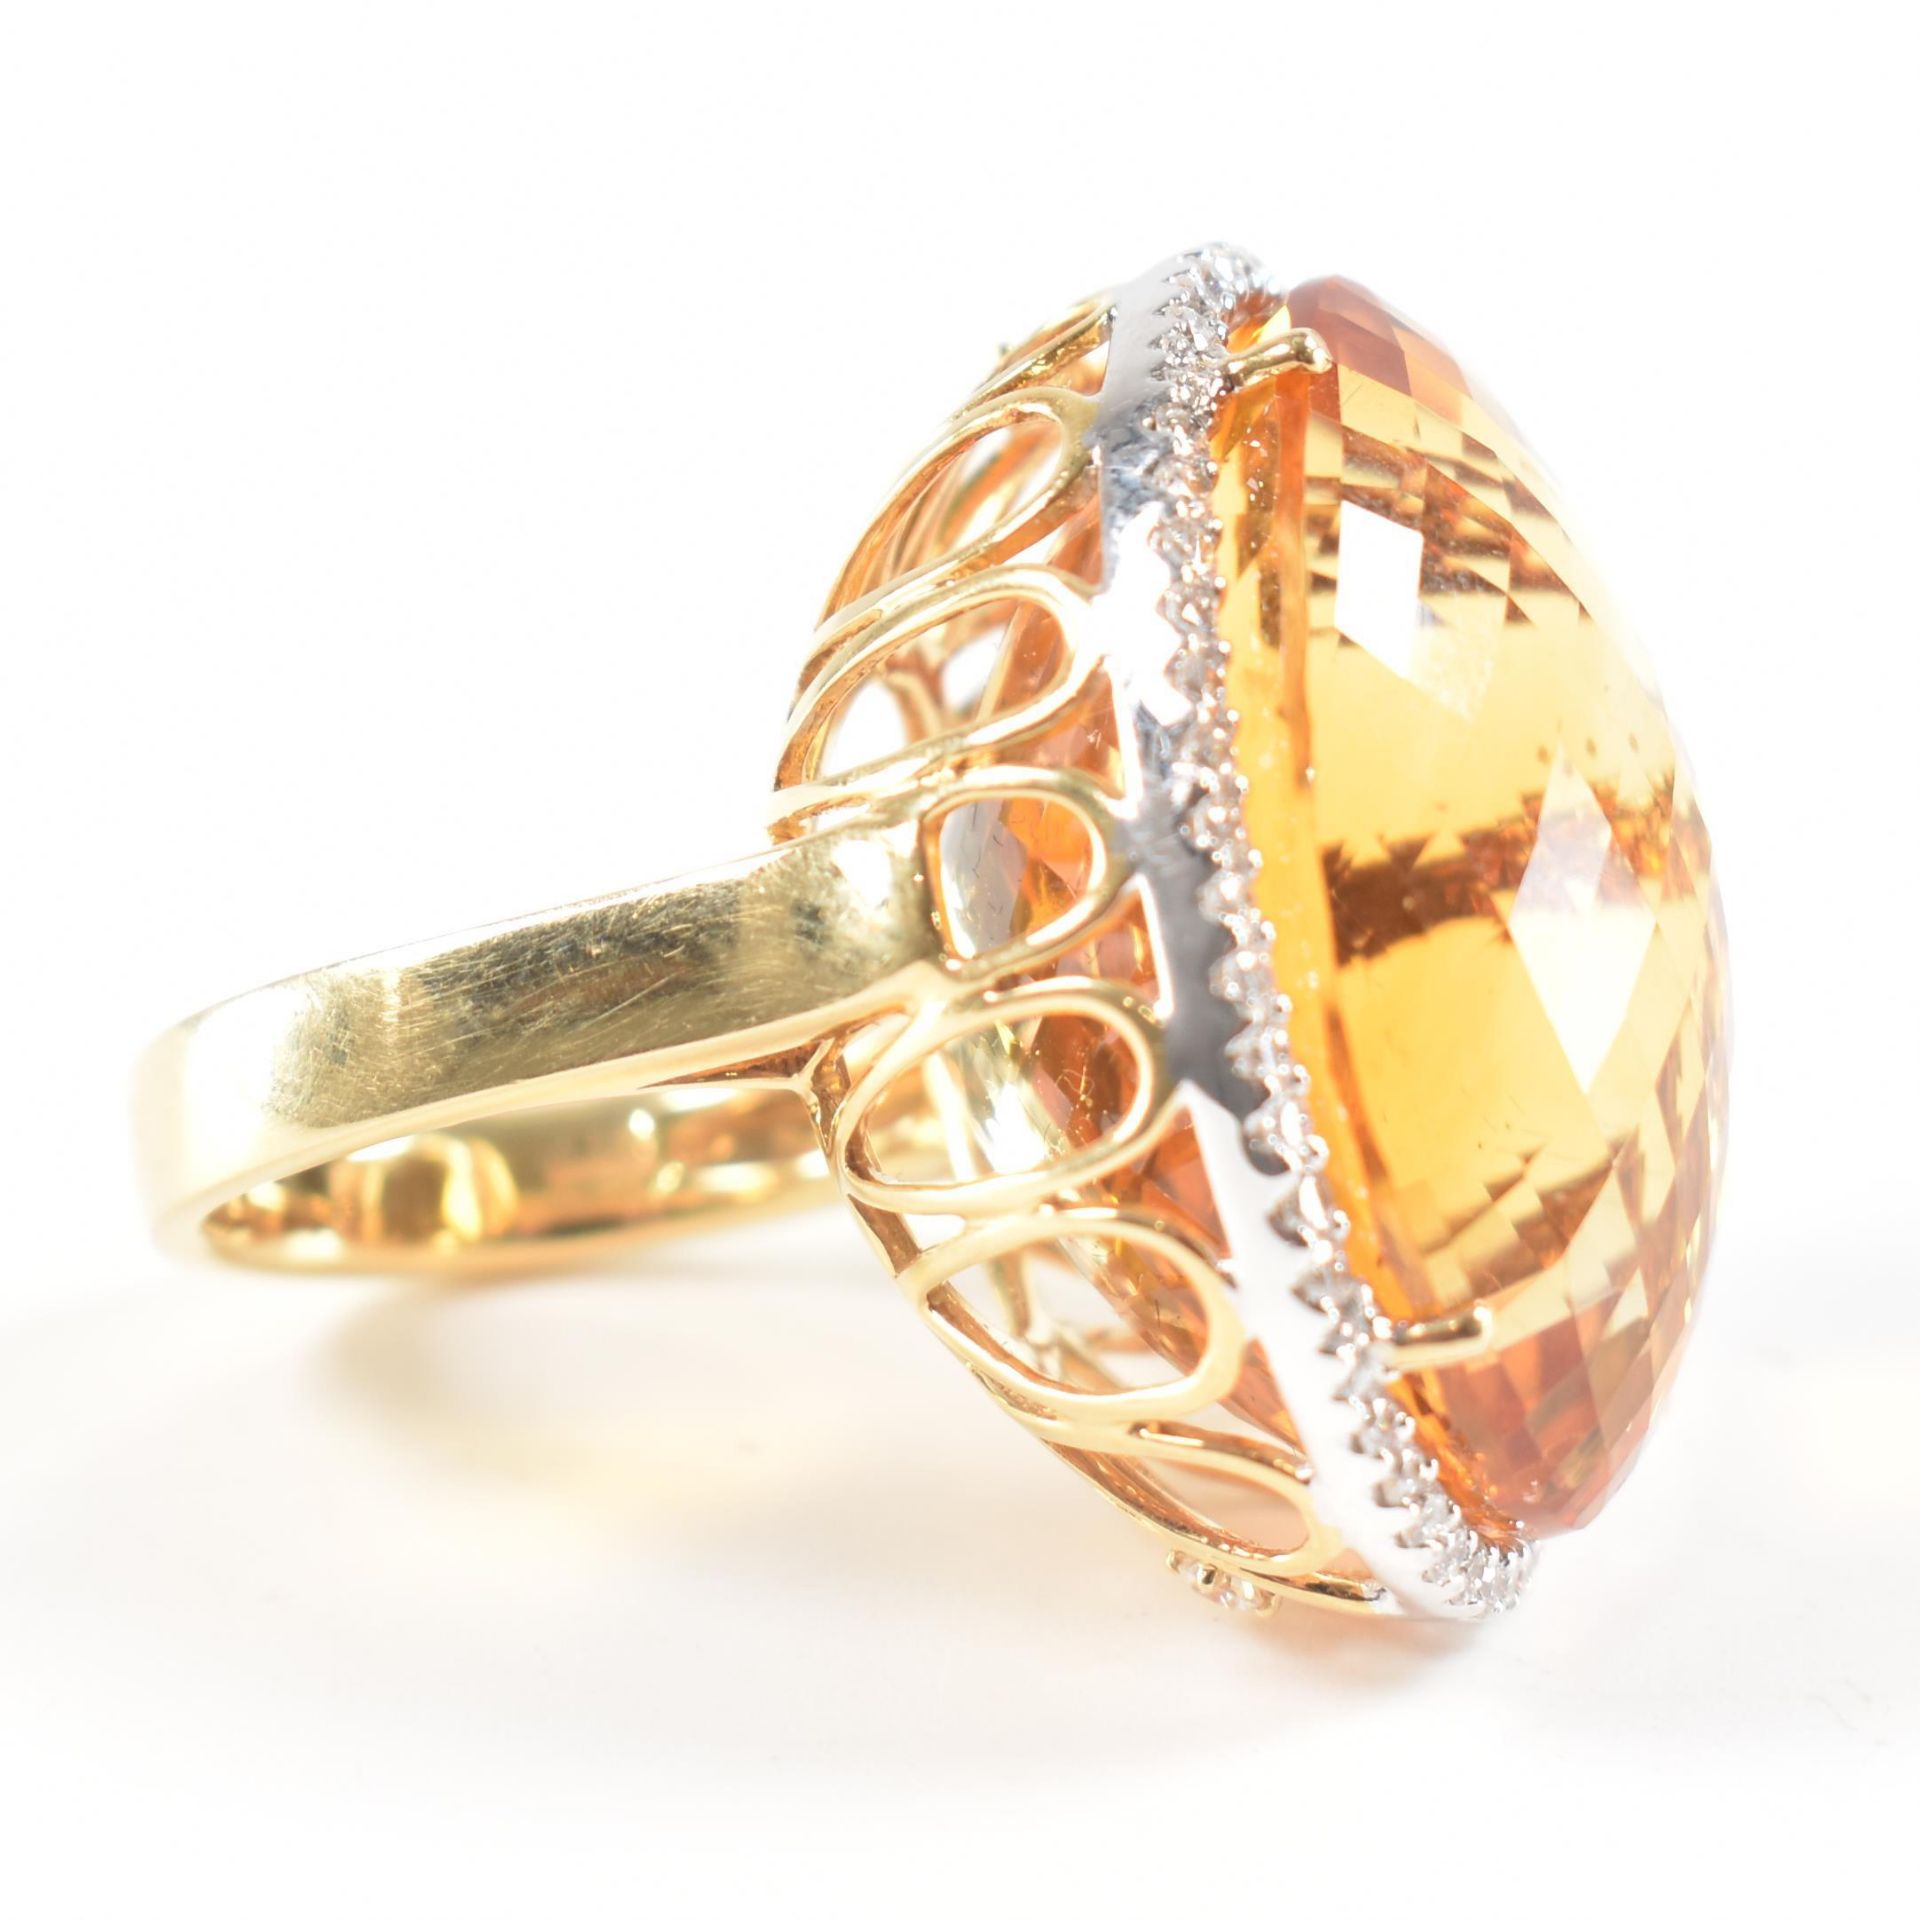 HALLMARKED 18CT GOLD CITRINE & DIAMOND COCKTAIL RING - Image 5 of 9